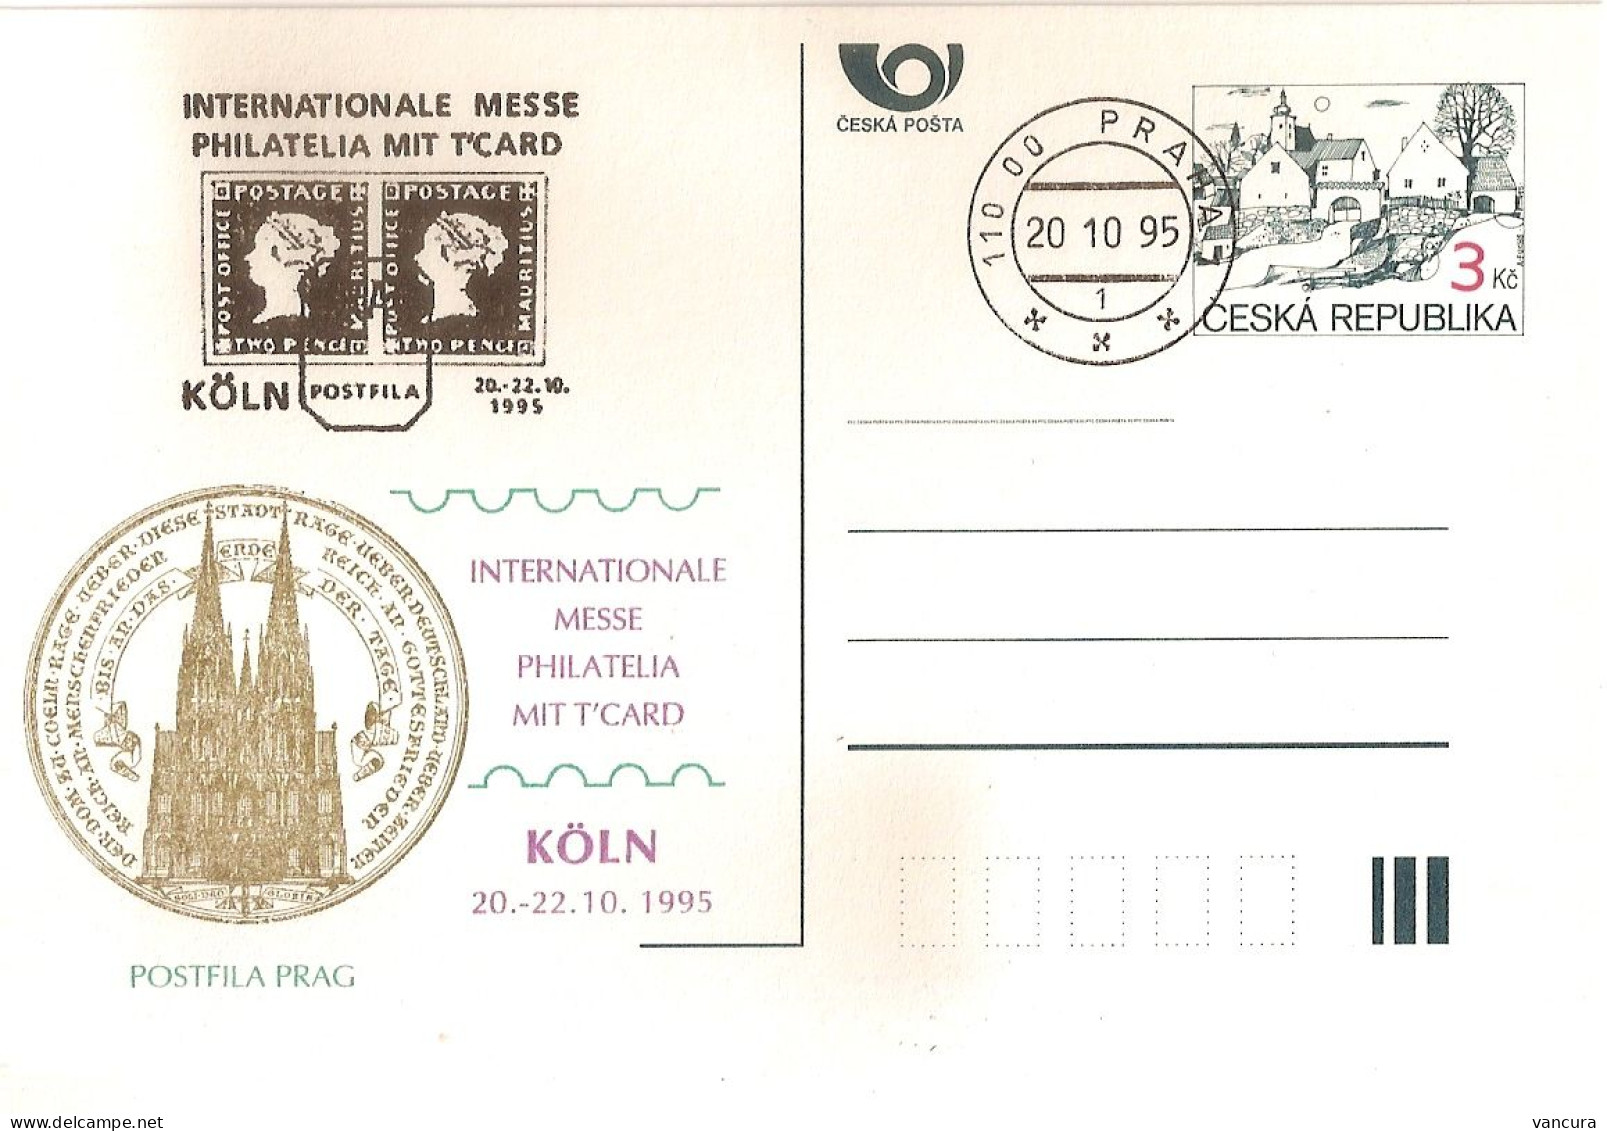 CDV A 10 Czech Republic Köln 1995 NOTICE POOR SCAN, BUT THE CARD IS PERFECT! Pennyblack - Cartoline Postali